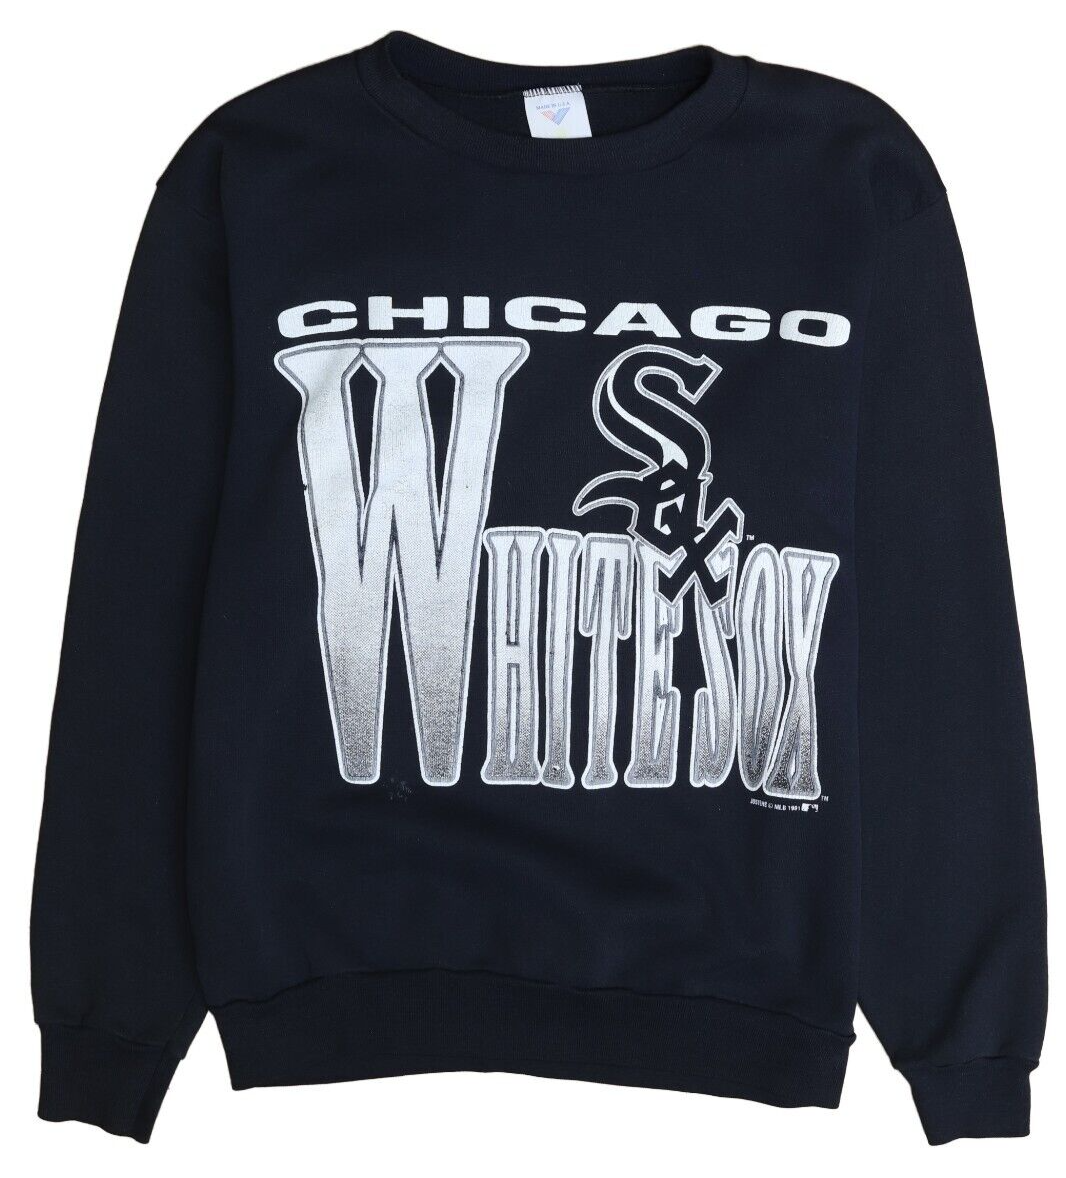 Vintage Chicago White Sox Sweatshirt Crewneck Size Medium 1991 90s MLB